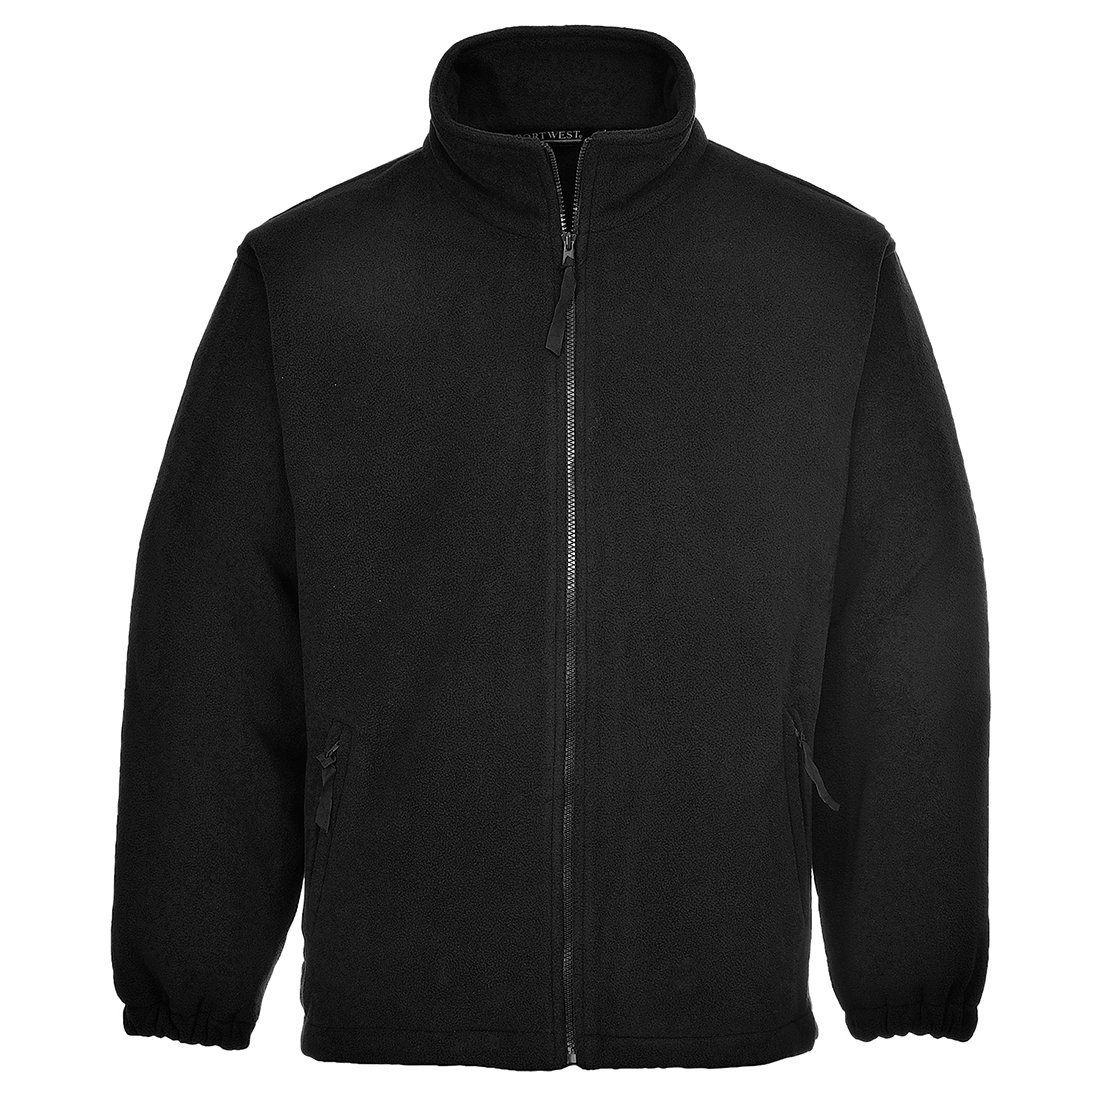 Portwest UF205 - Aran Fleece Jacket